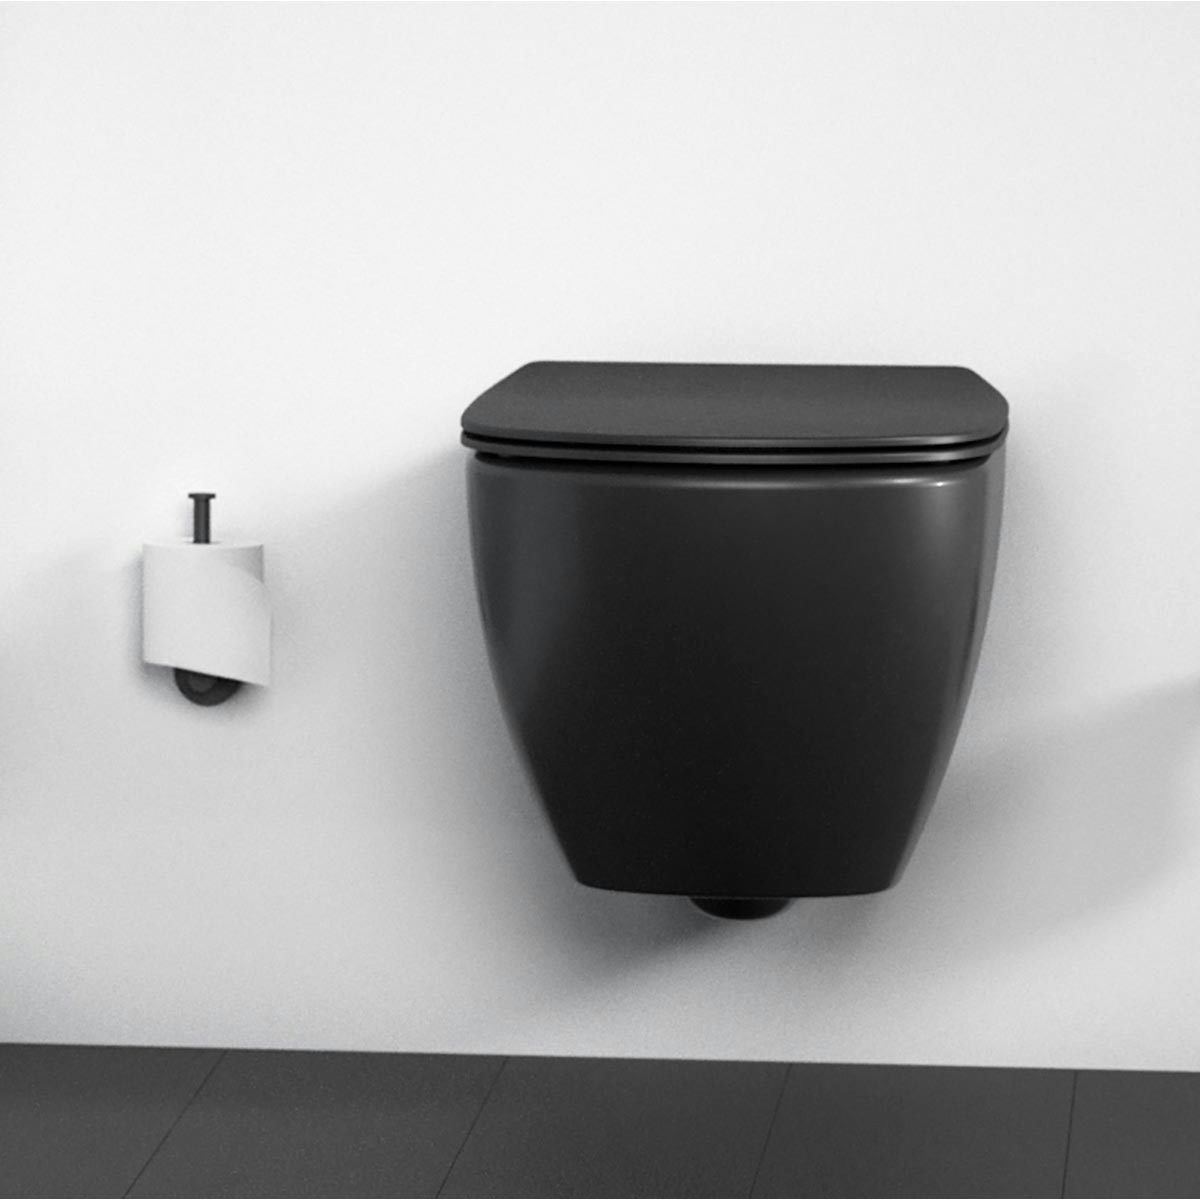 Ideal Standard IOM - Brosse WC avec support, noir / verre satiné A9119XG